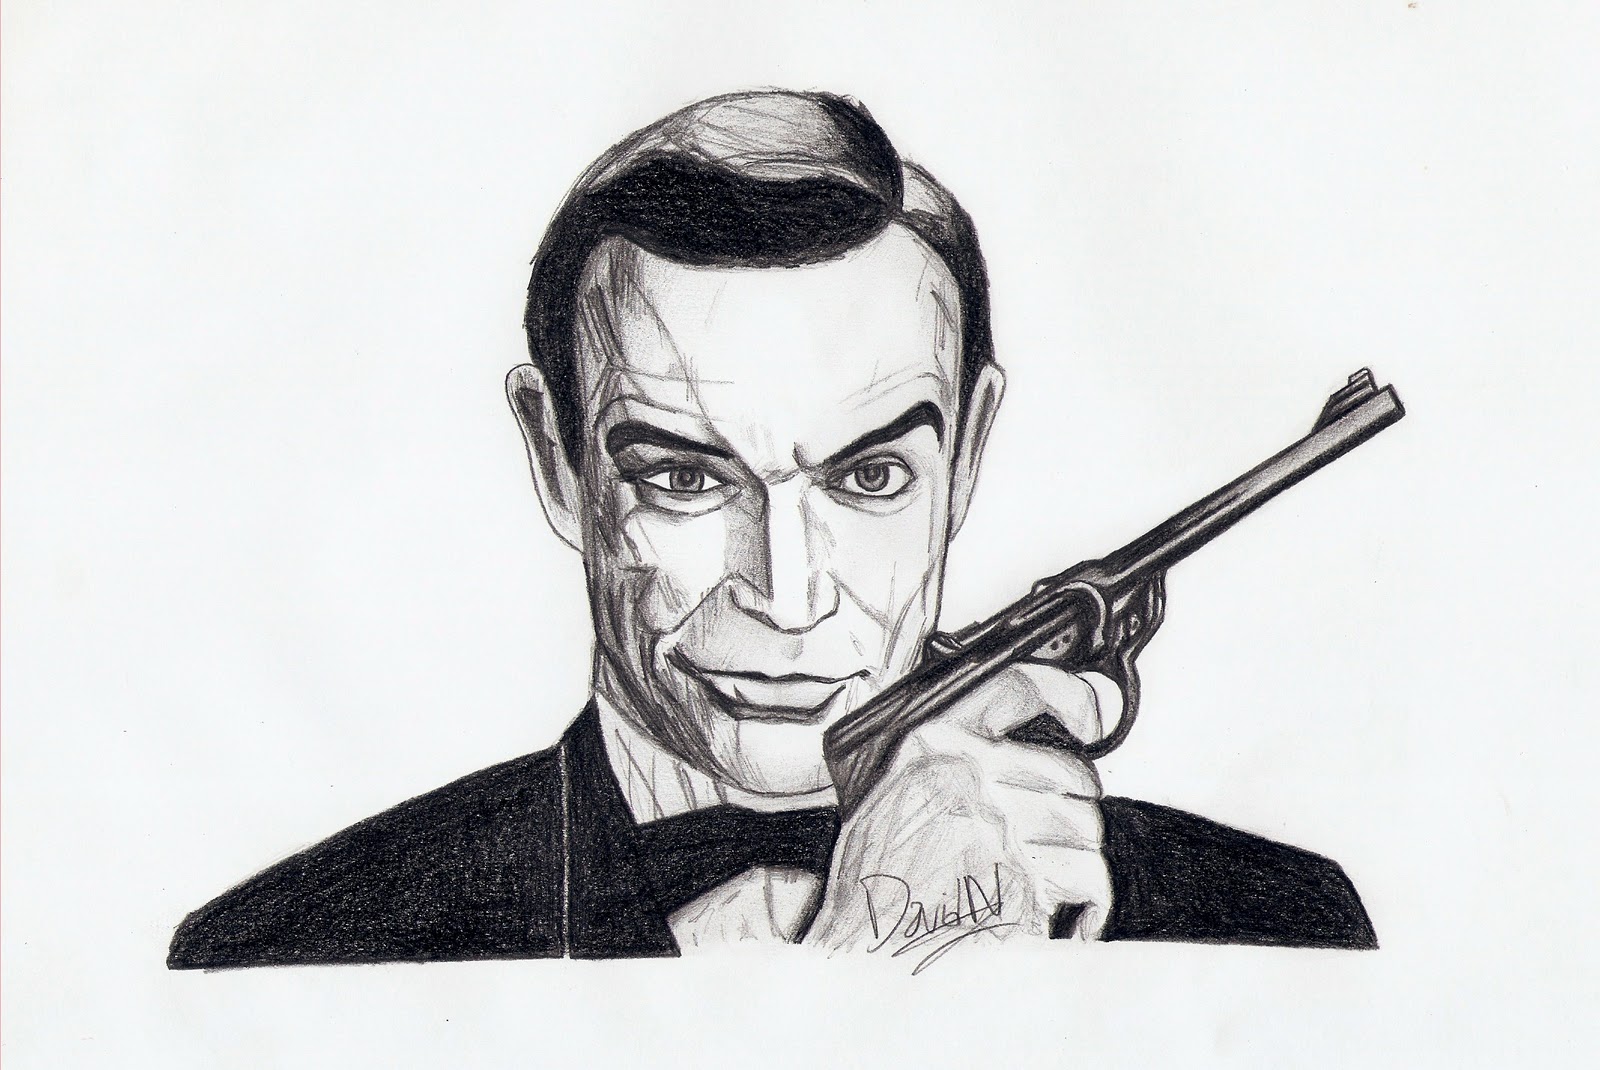 James Bond 007 - Daniel Craig - dlay.net - Digital Sketches - Paintings &  Prints, Entertainment, Movies, Action & Adventure - ArtPal